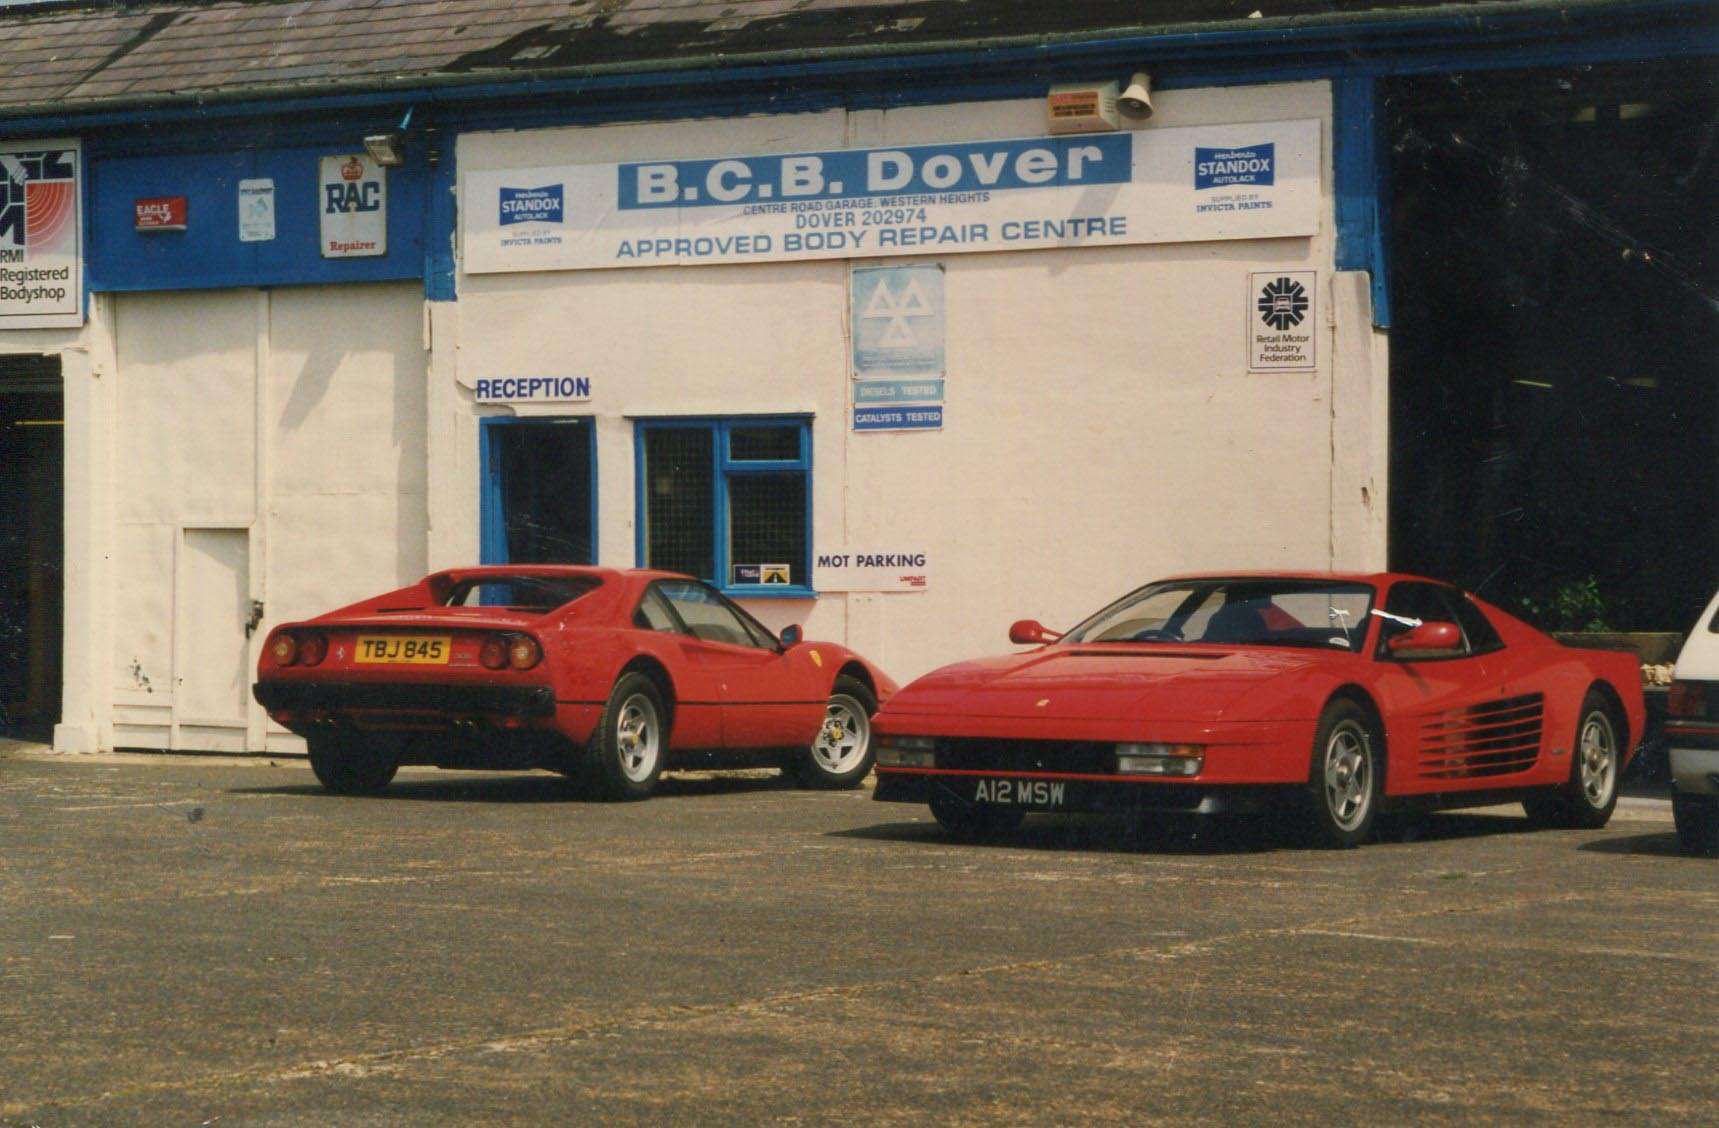 Two Ferraris outside the garage